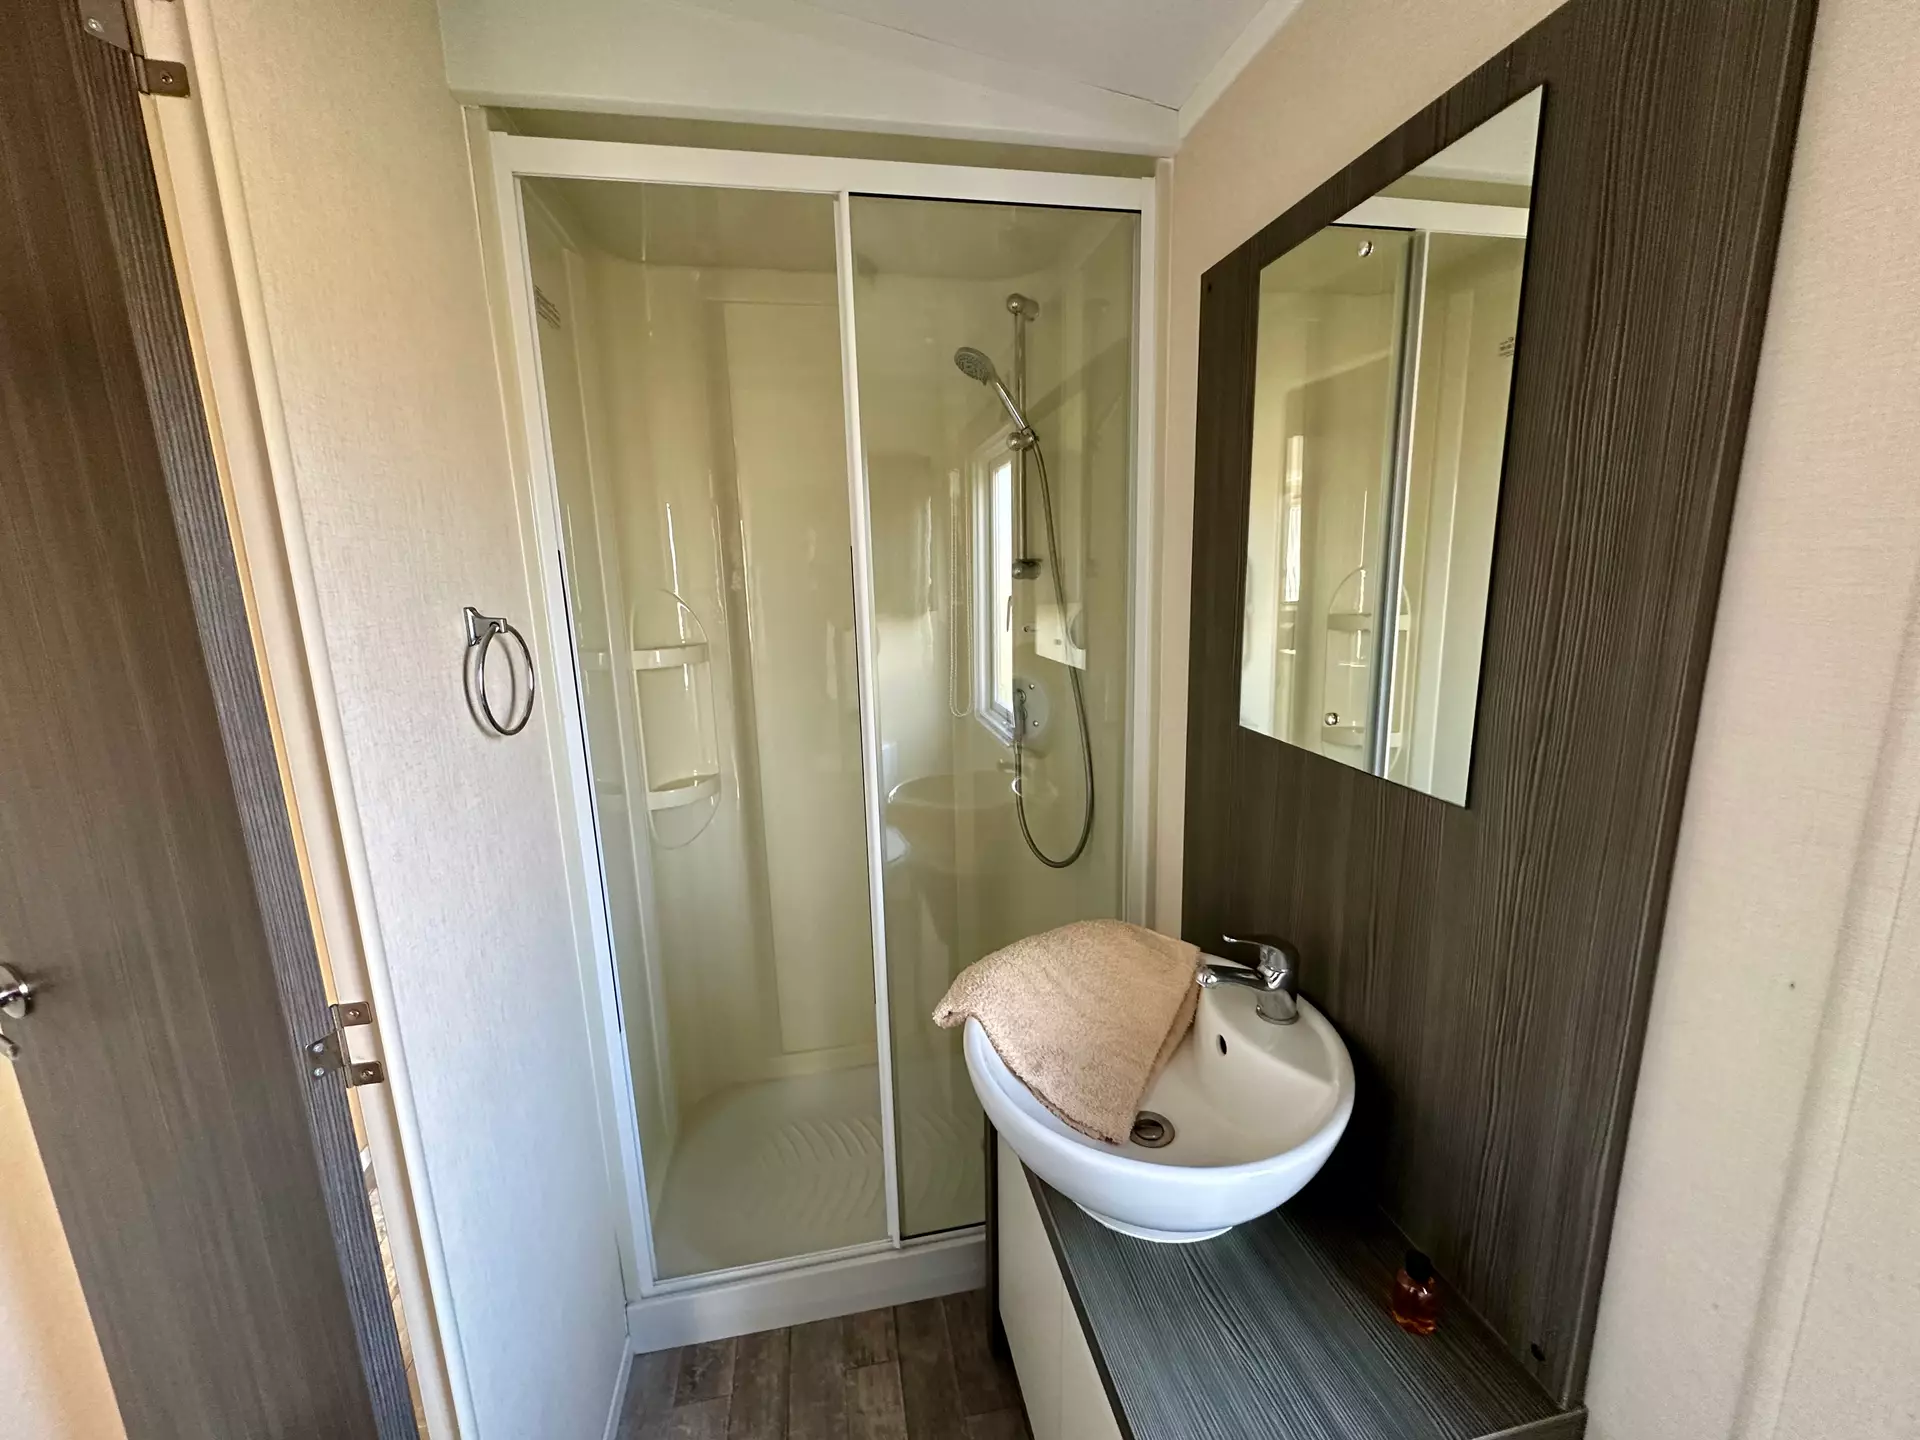 Regal Kensington 2016 40x14 2 bed main shower room